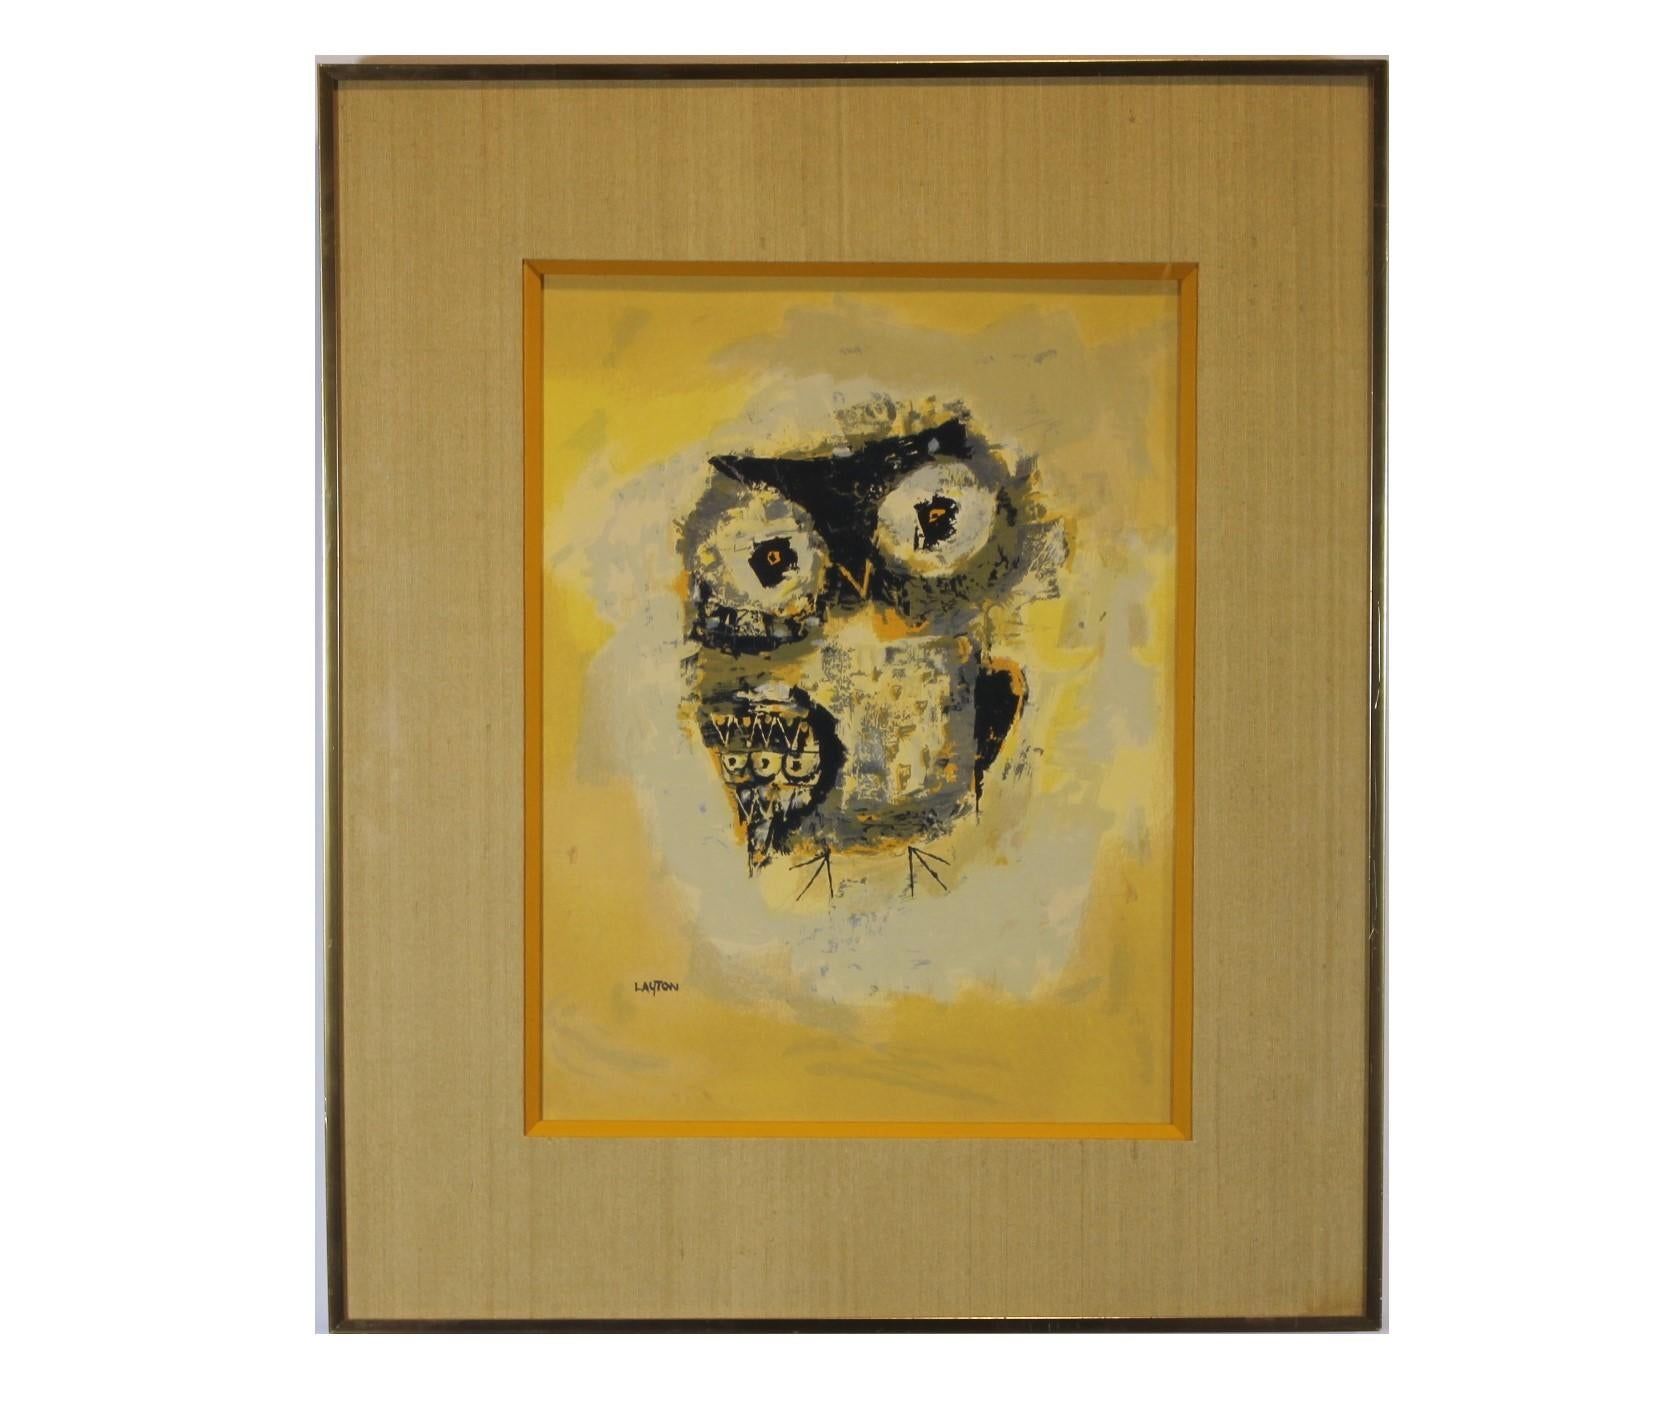 Margaret Layton Figurative Print - "Blinky" Yellow Toned Print of an Owl